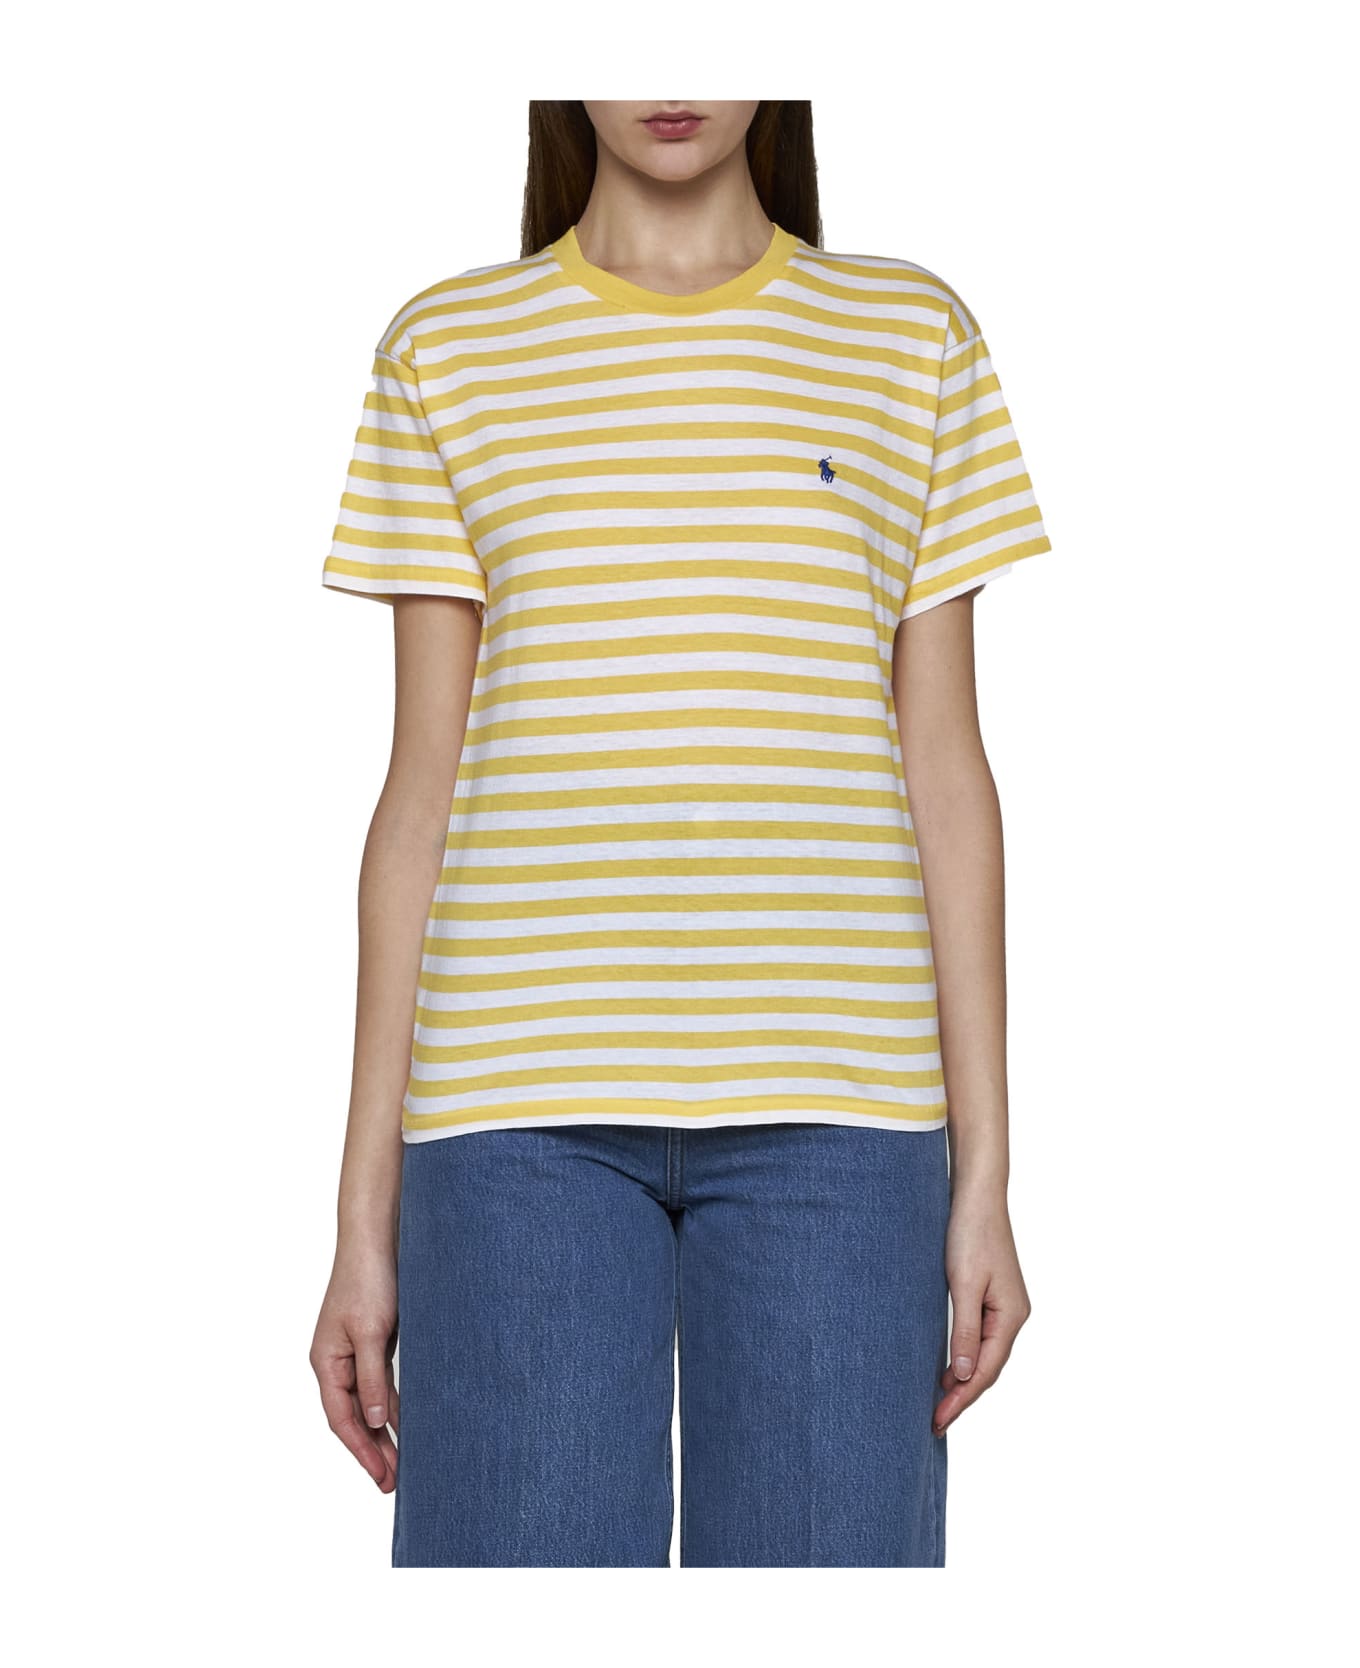 Polo Ralph Lauren T-Shirt - Chrome yellow/white